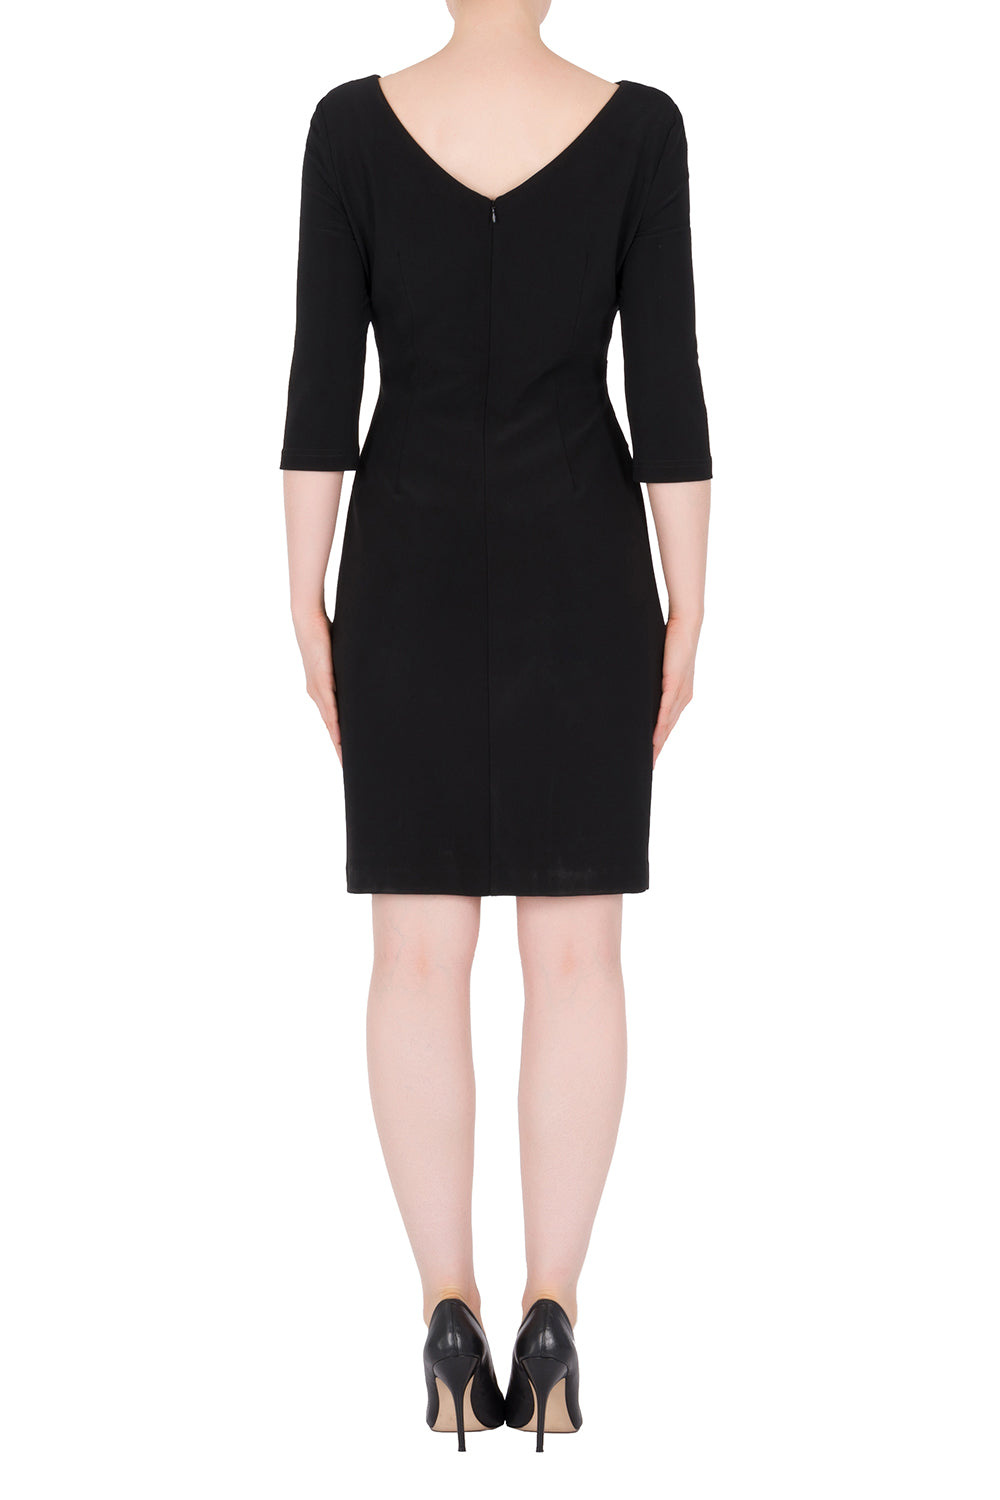 Joseph Ribkoff Black Dress Style 184000